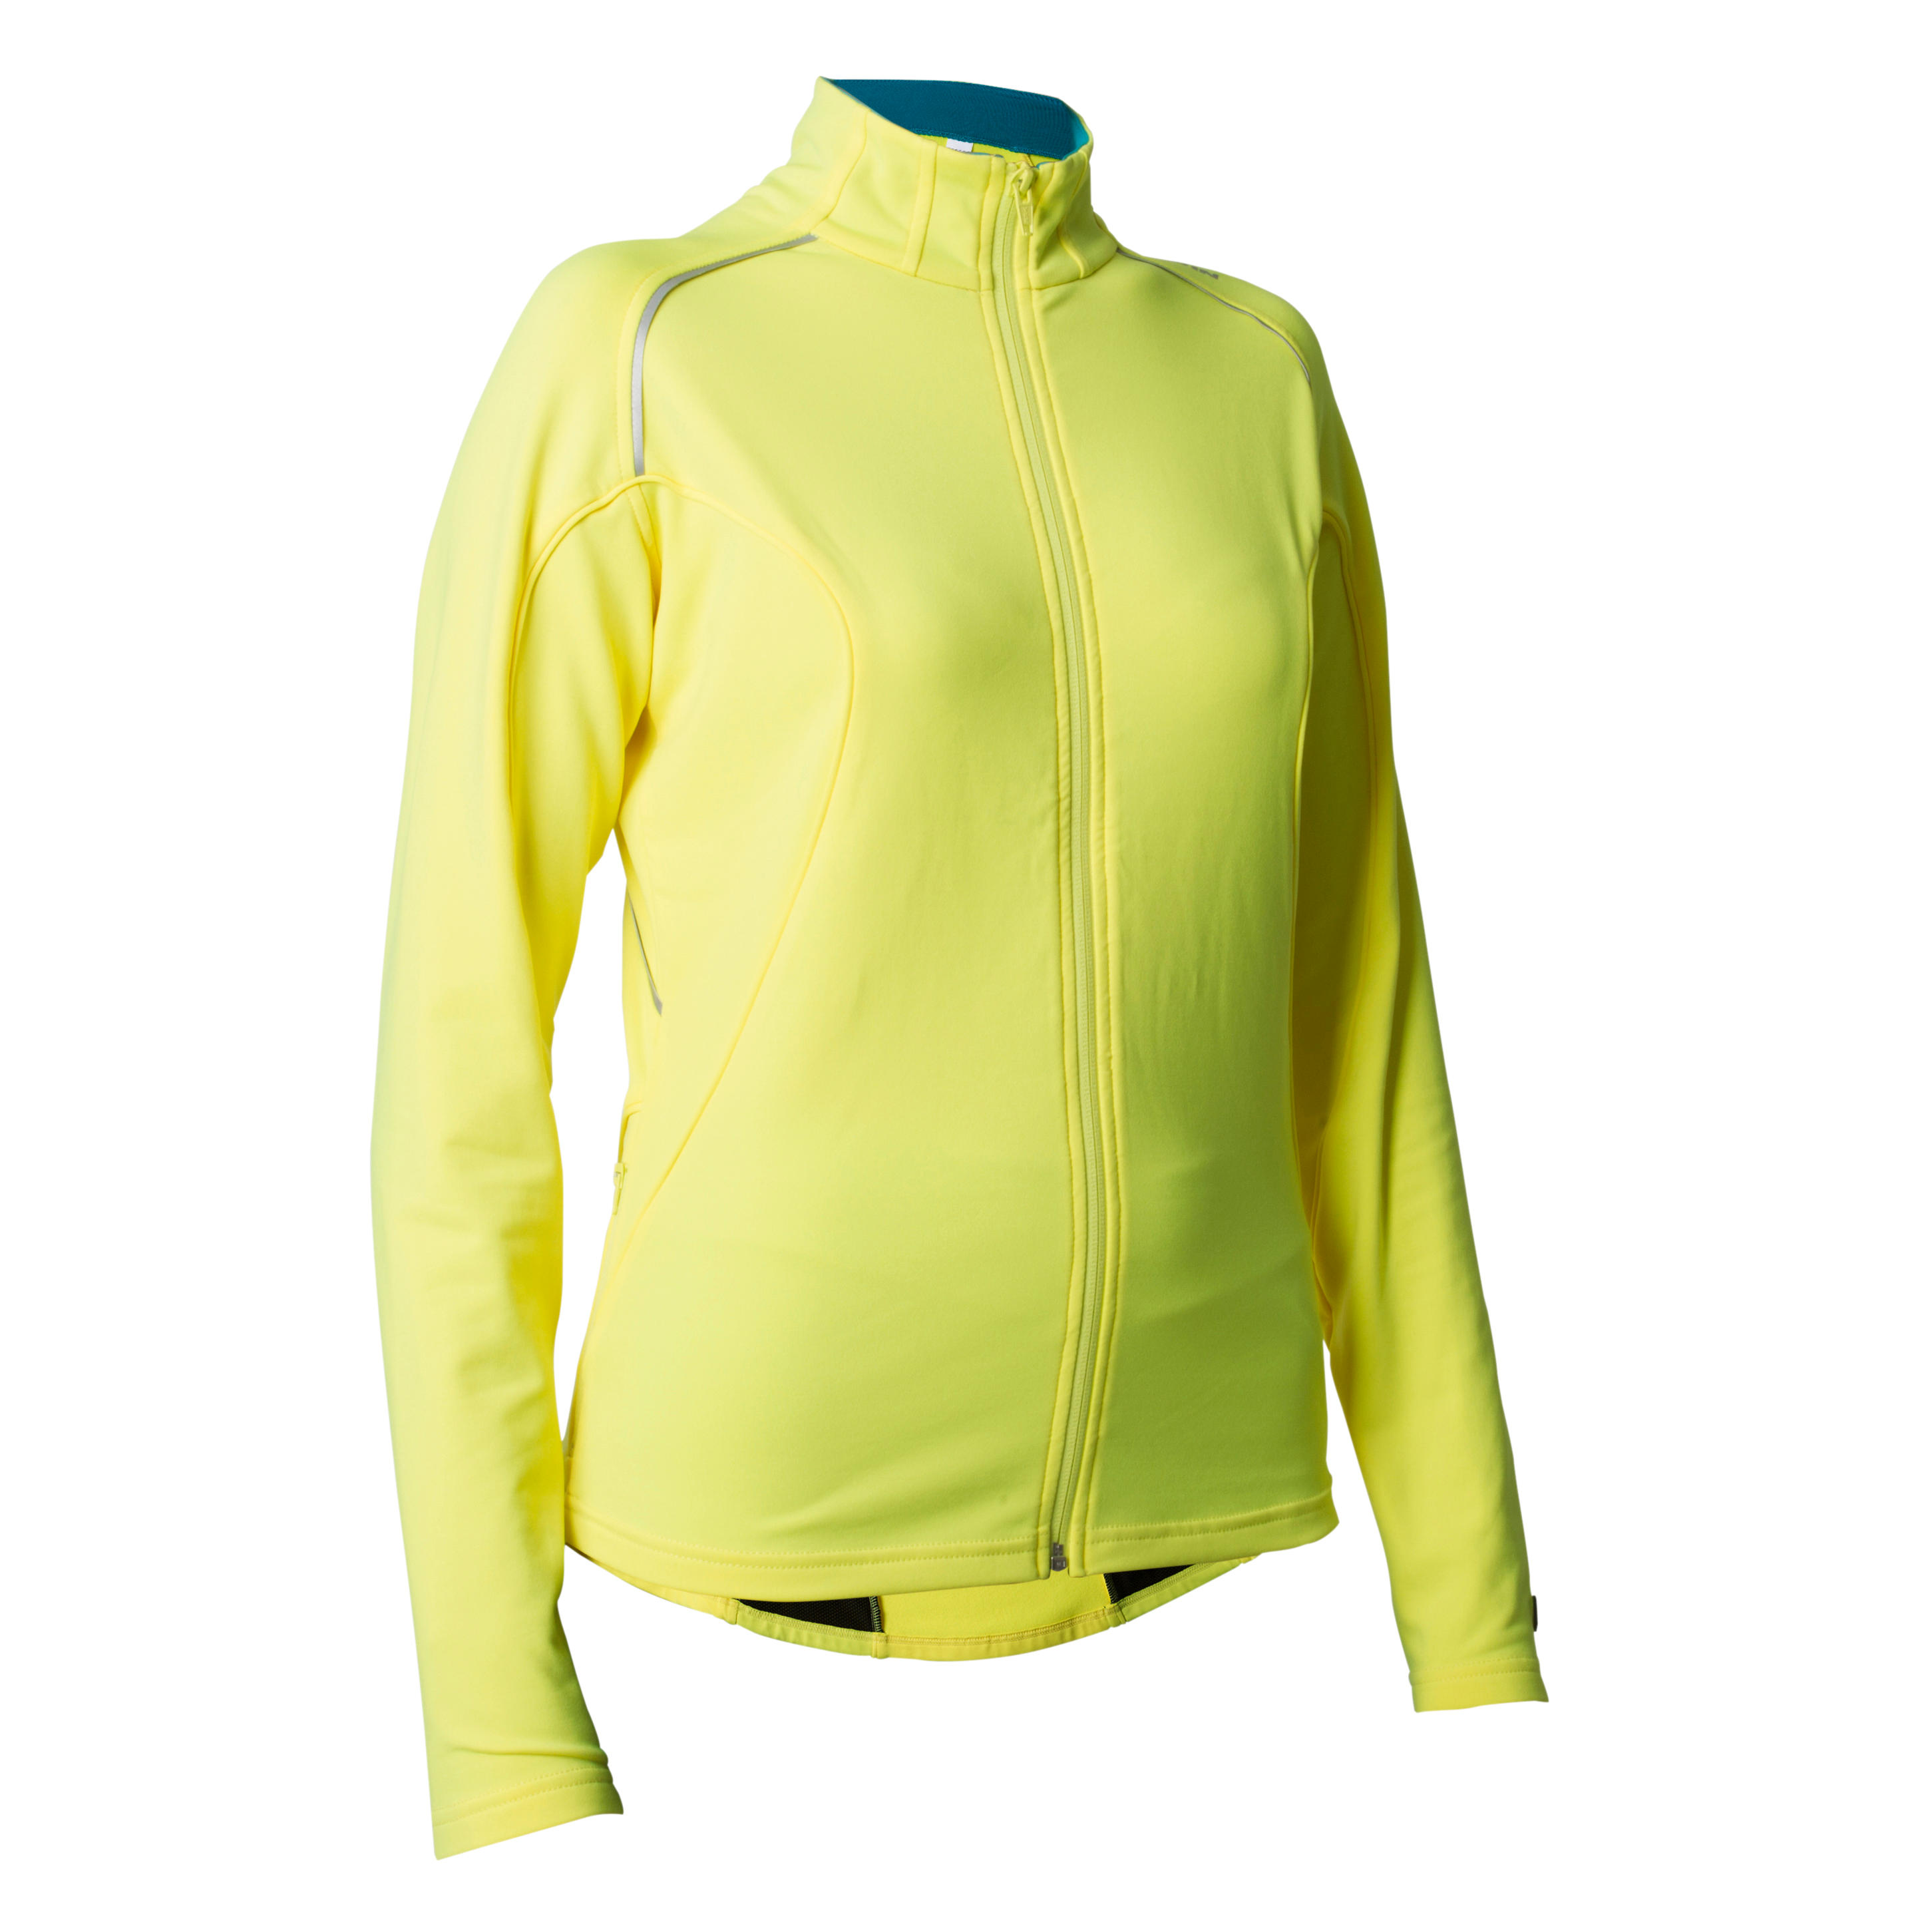 BTWIN 500 Women's Long-Sleeved Cycling Jersey - Yellow